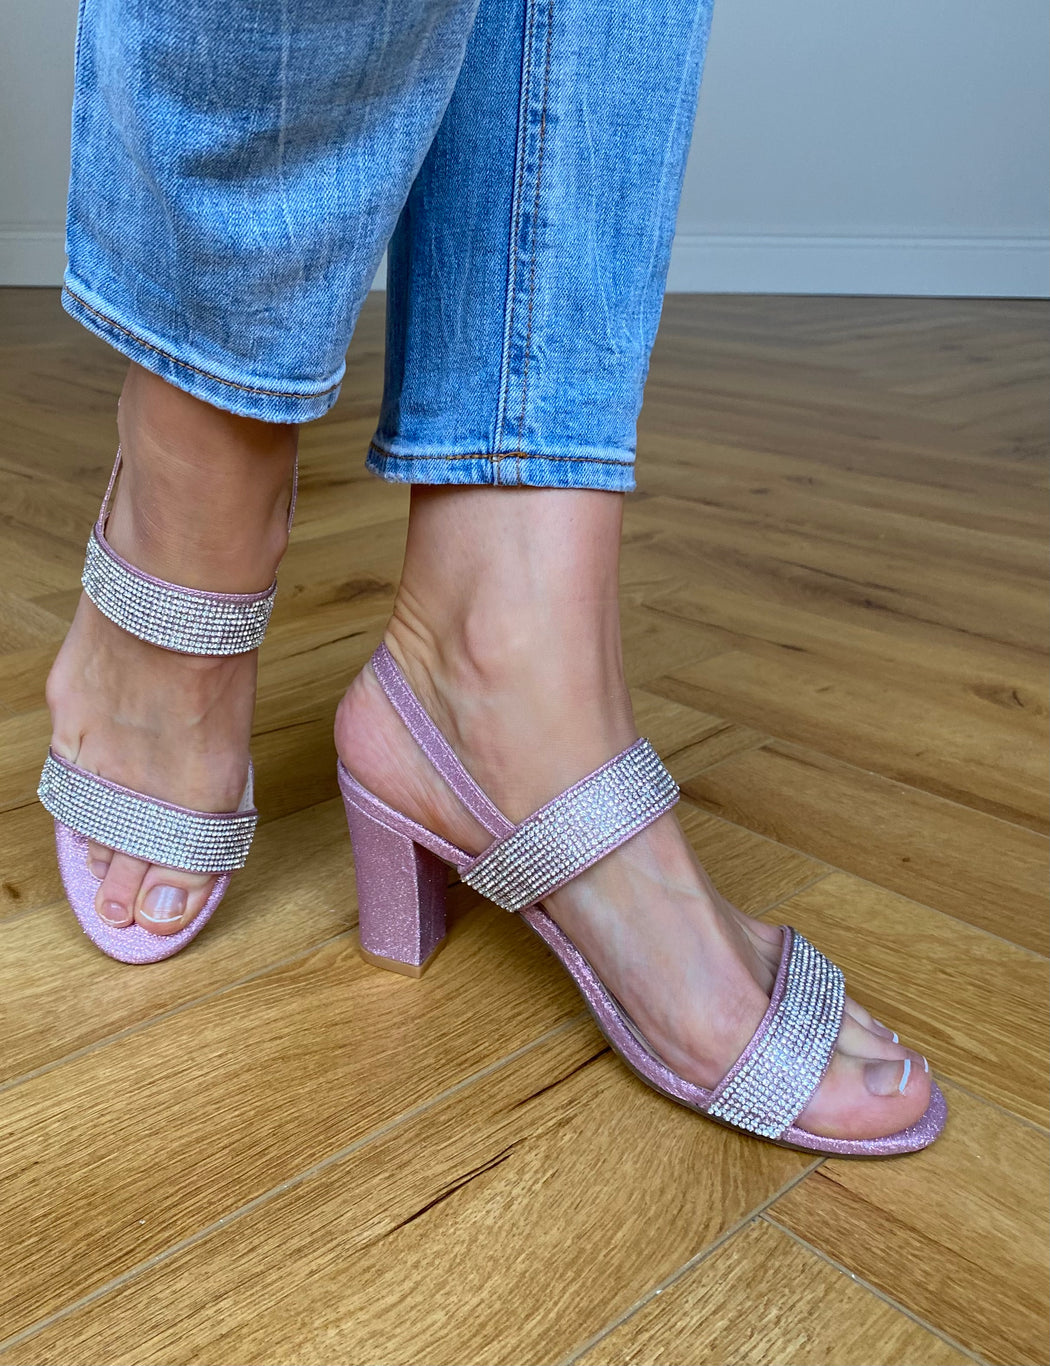 Pink gem millhouse heels